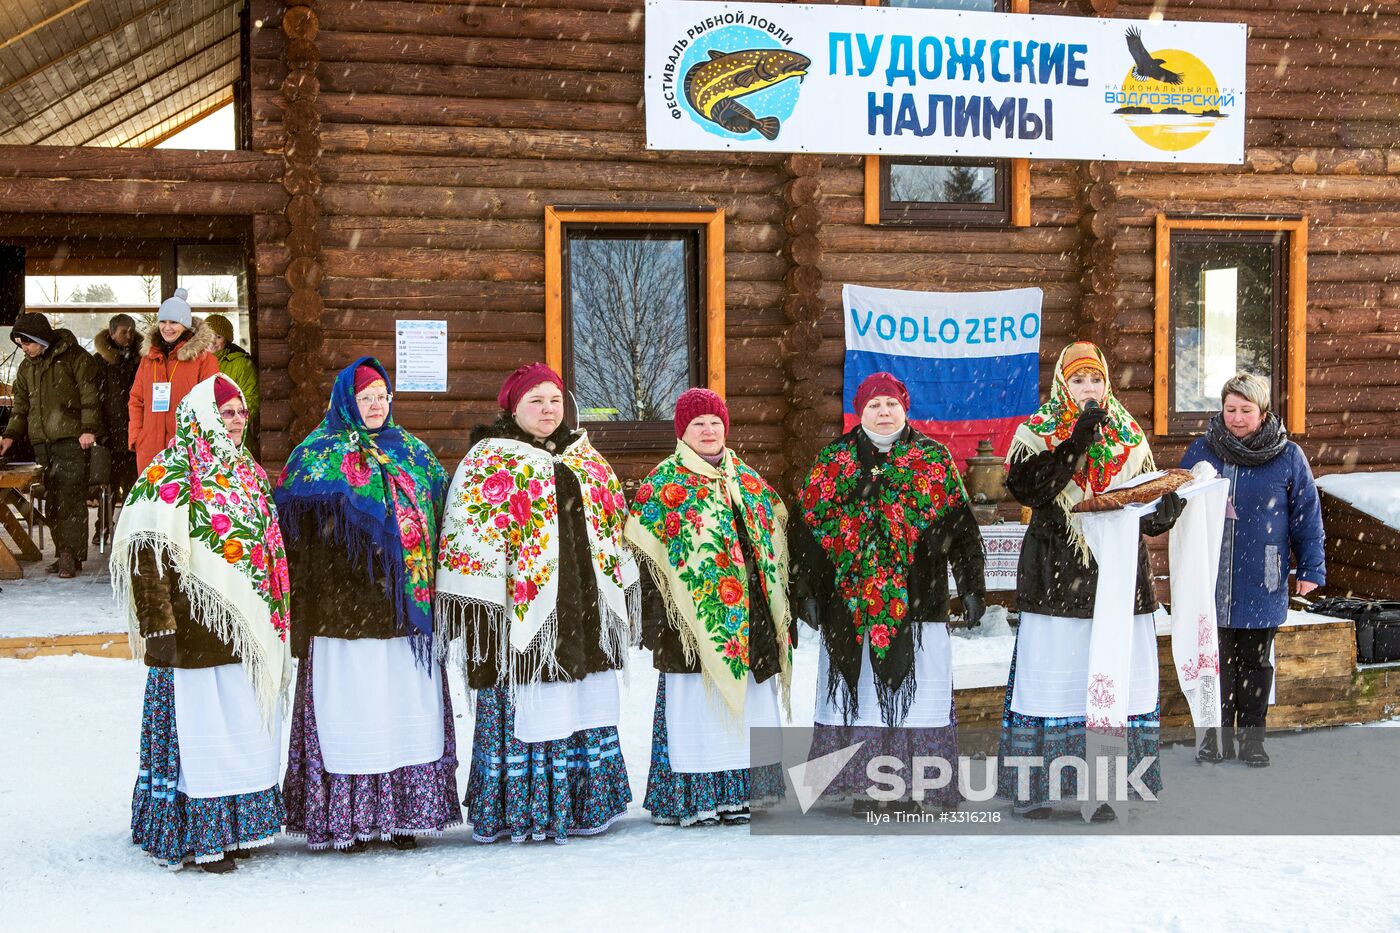 Pudozh Burbots fishing festival in Vodlozersky national park